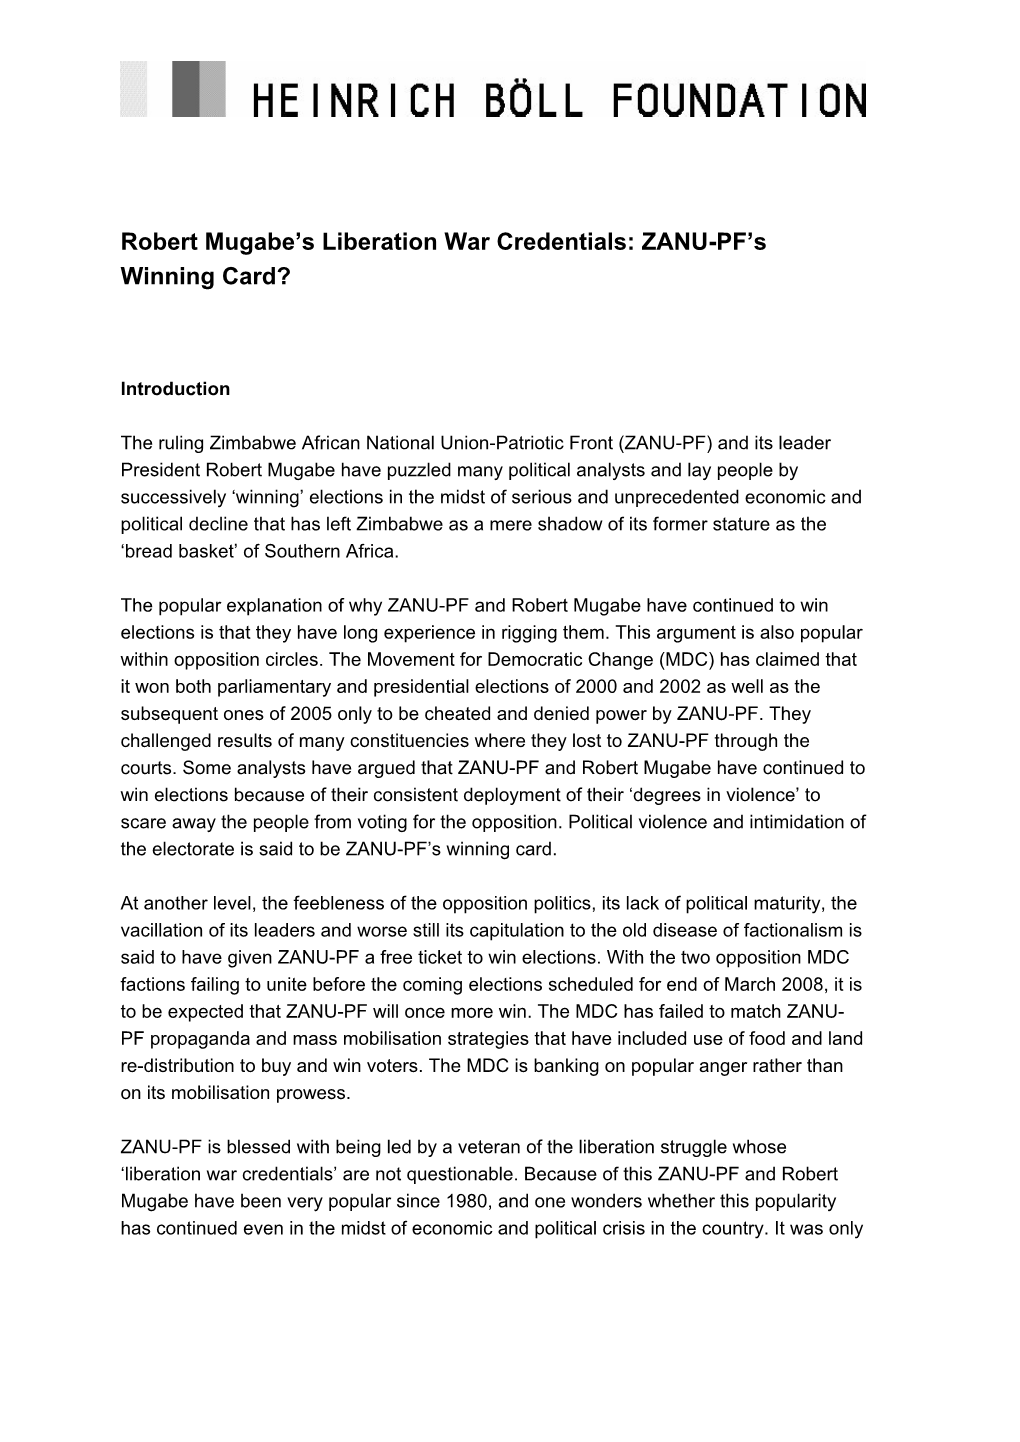 Robert Mugabe's Liberation War Credentials: ZANU-PF's Winning